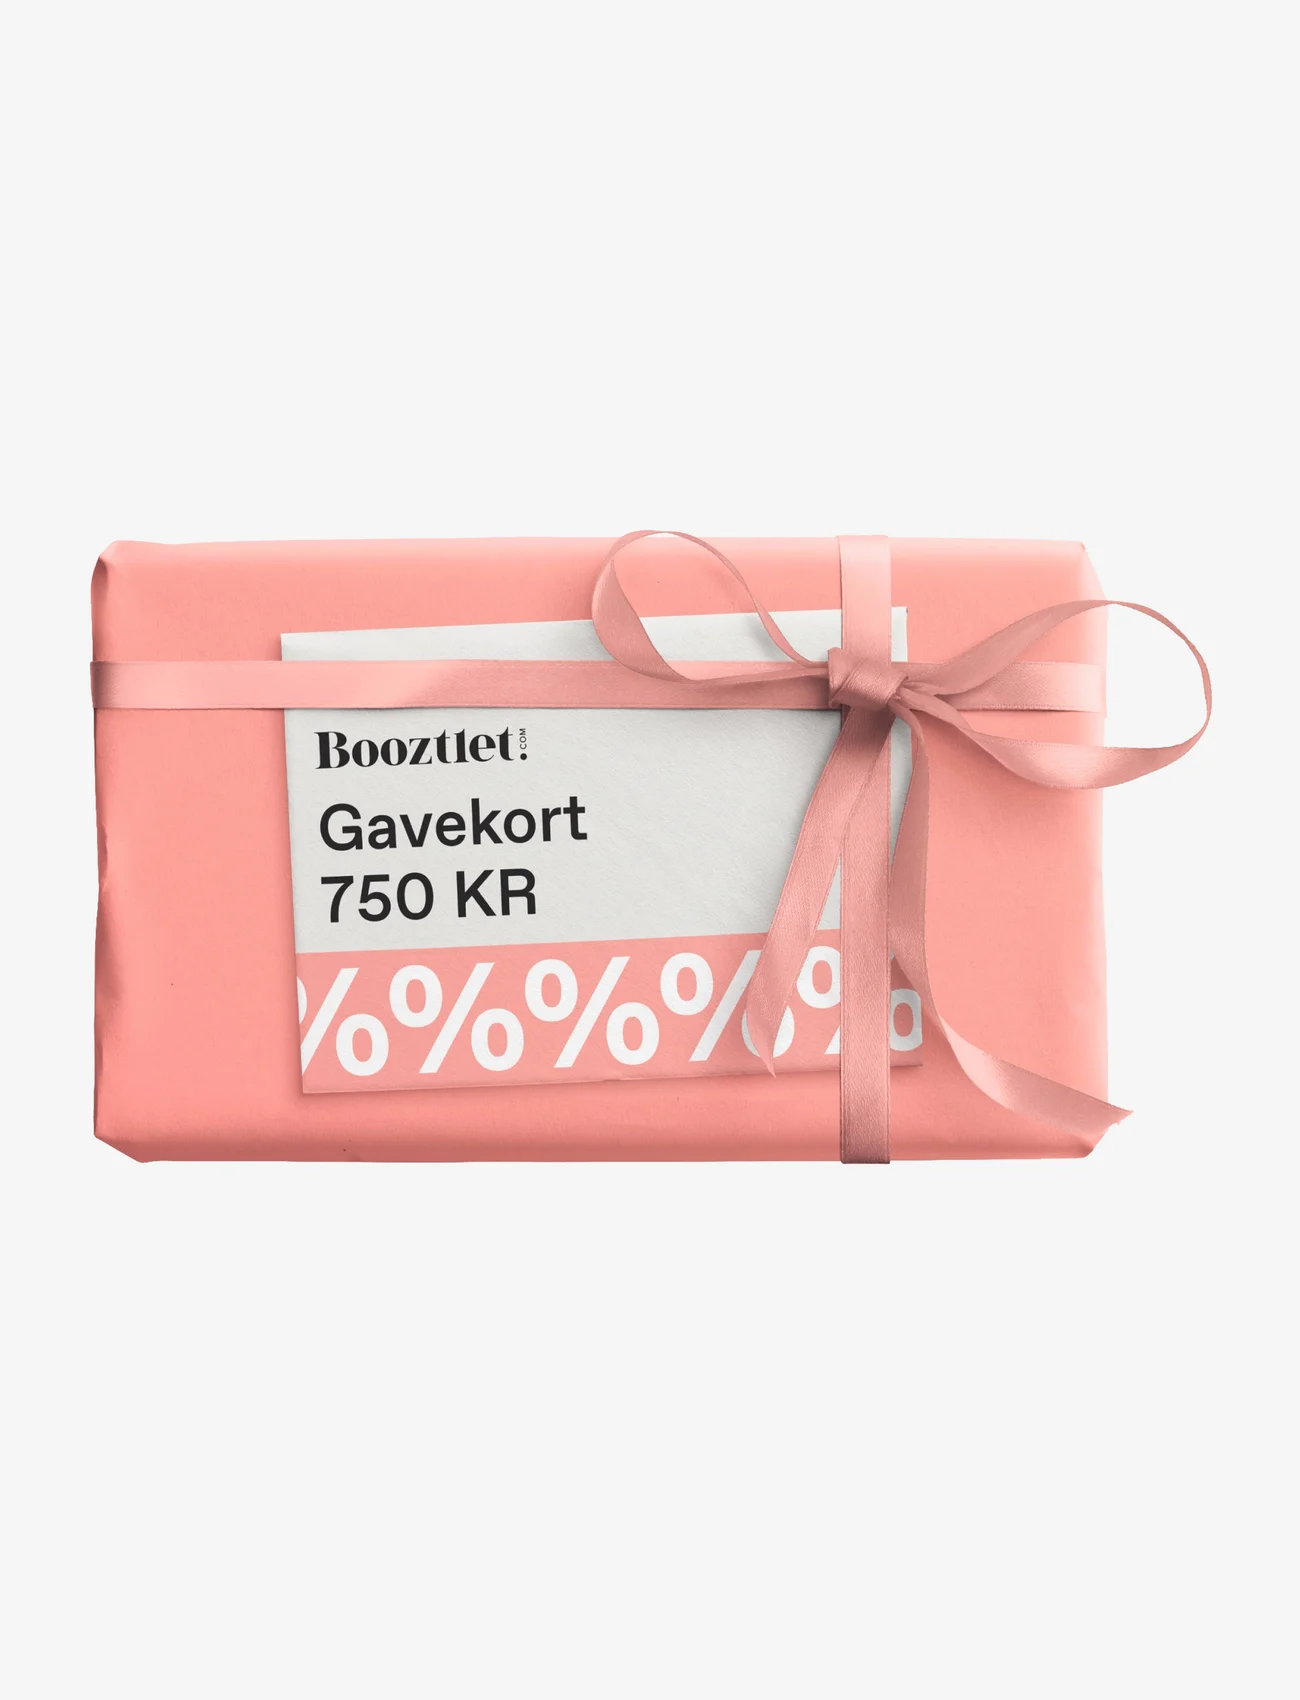 Booztlet Gift - Booztlet Gift Card - gavekort - dkk 750 - 0